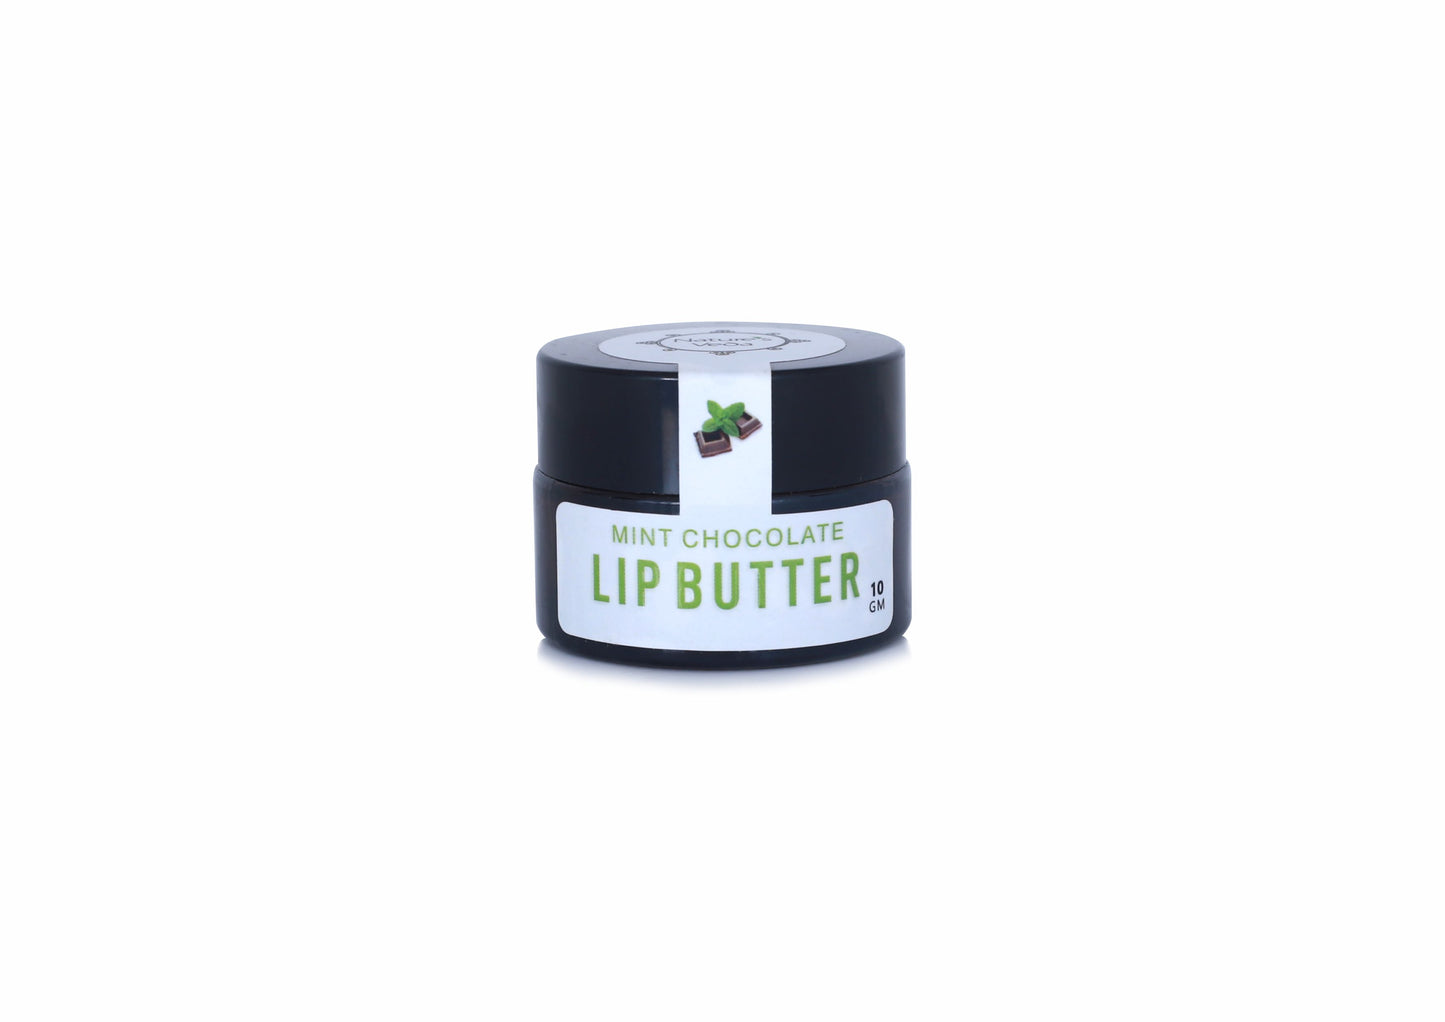 Mint Chocolate Lip Butter 10 gms